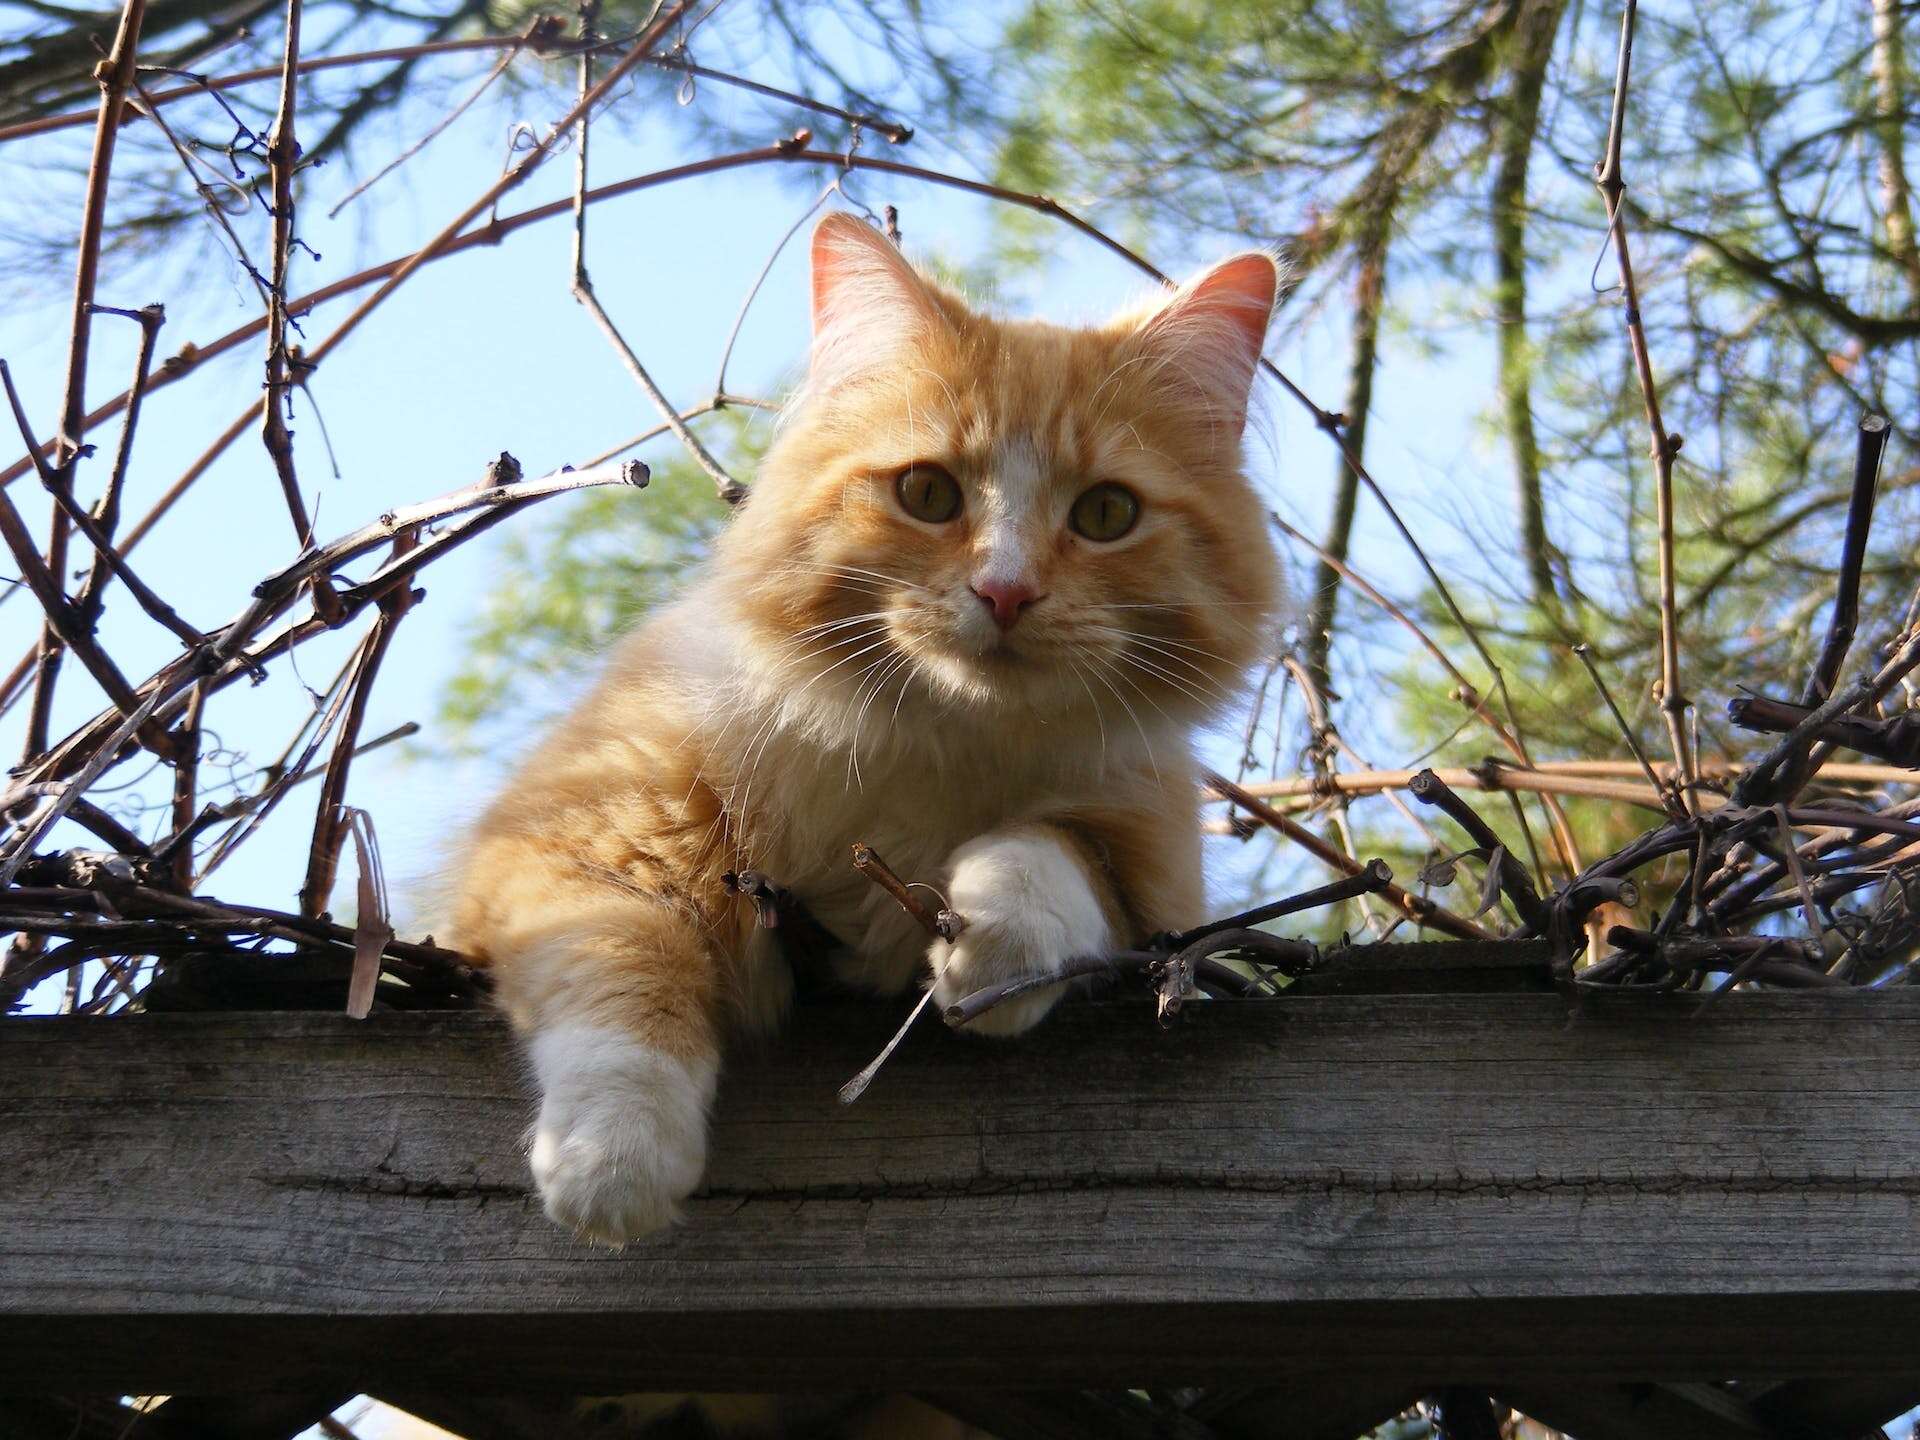 A cat peeking over a wooden enclosure fence